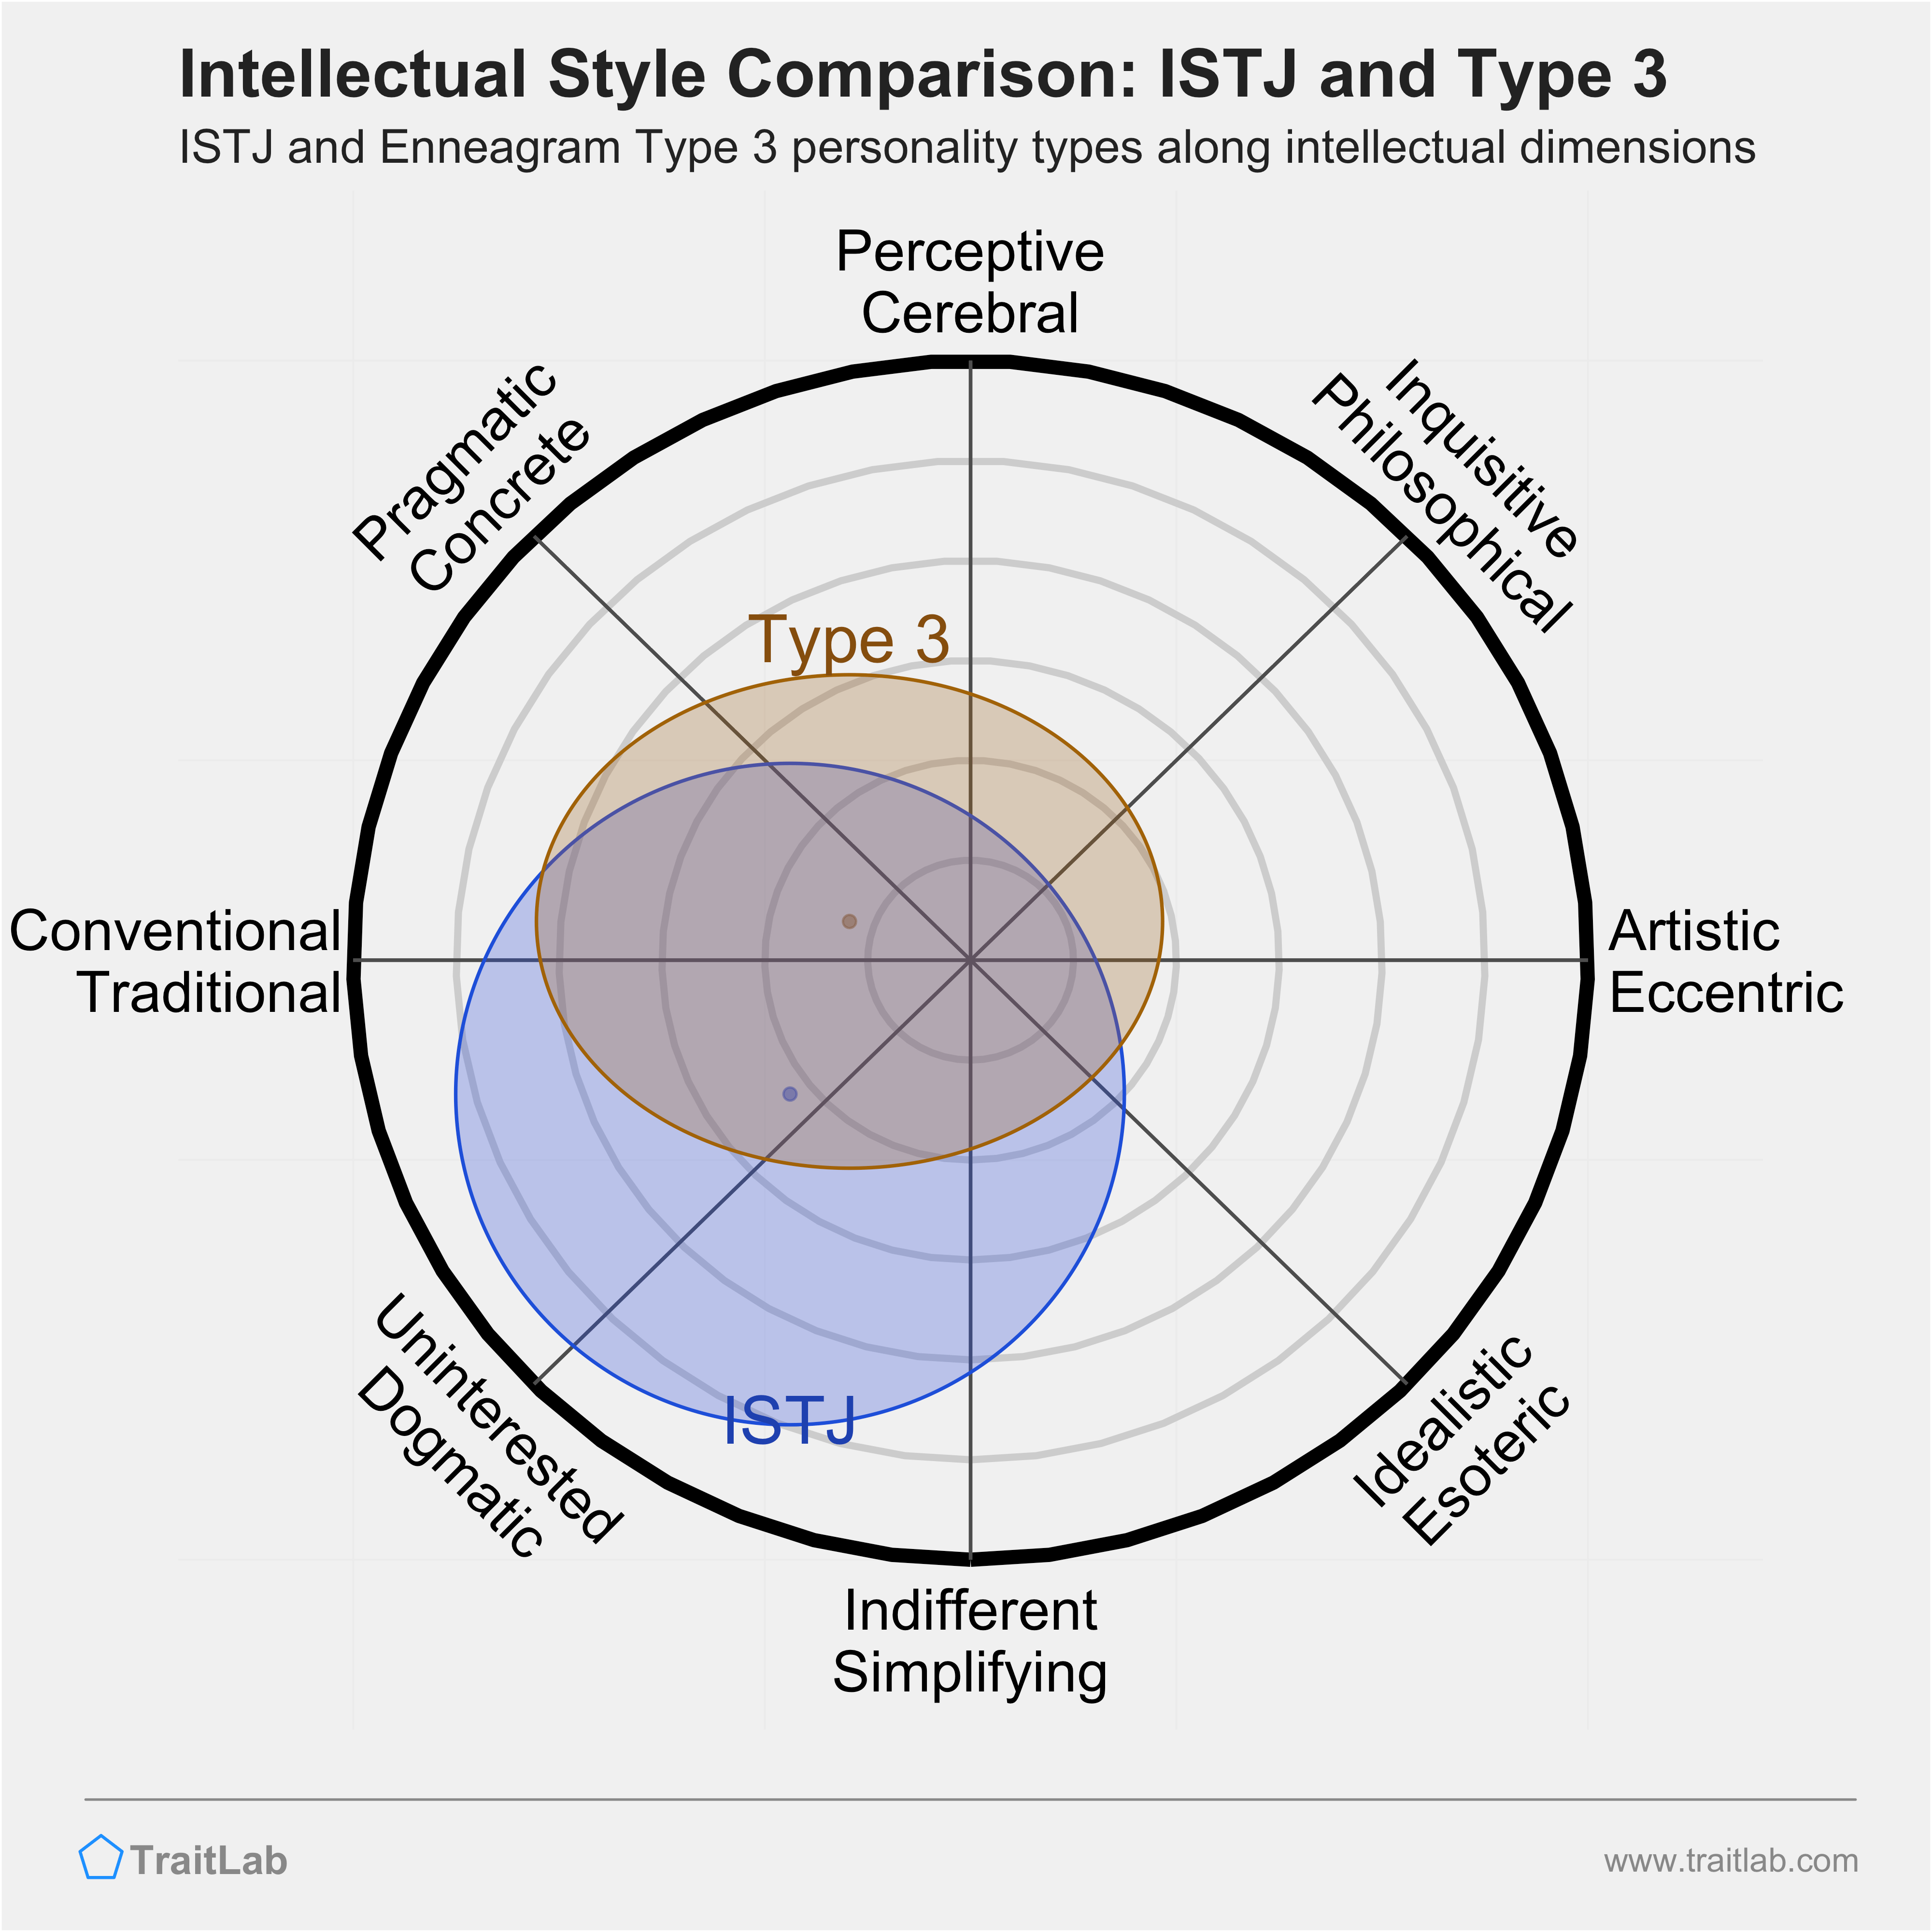 ISTJ and Type 3 comparison across intellectual dimensions